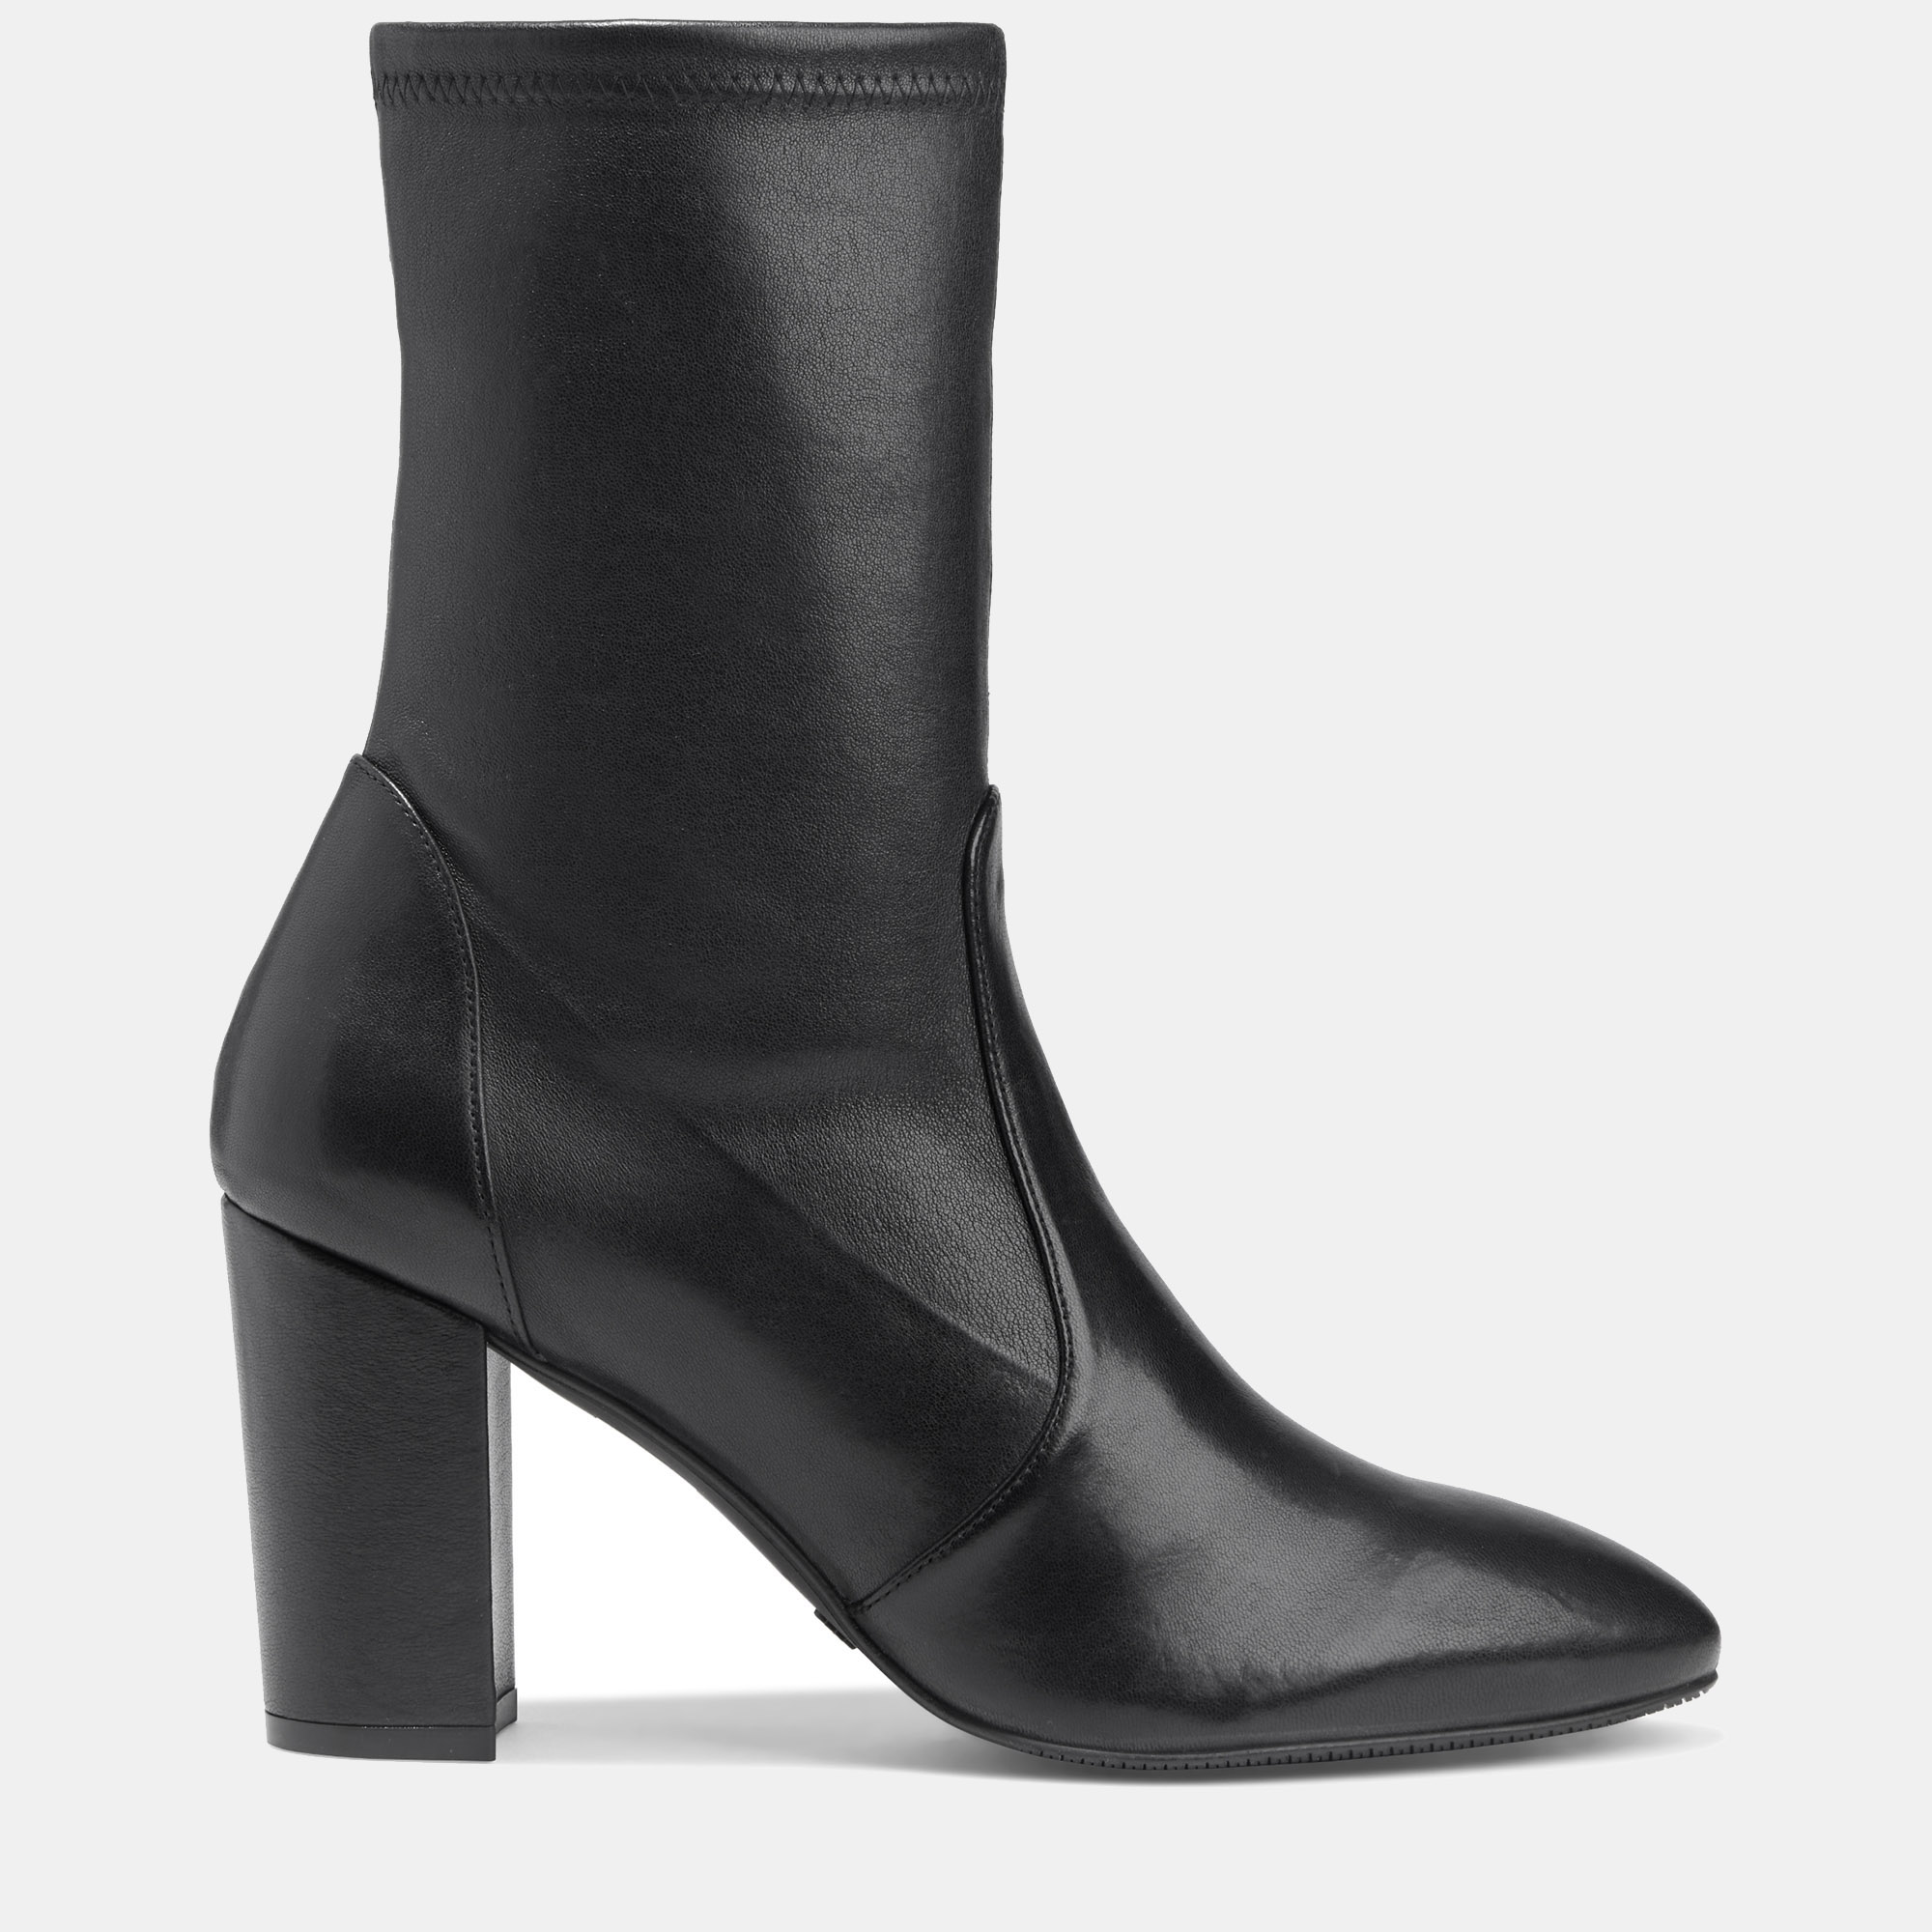 Stuart weitzman leather block heel ankle boots size 39